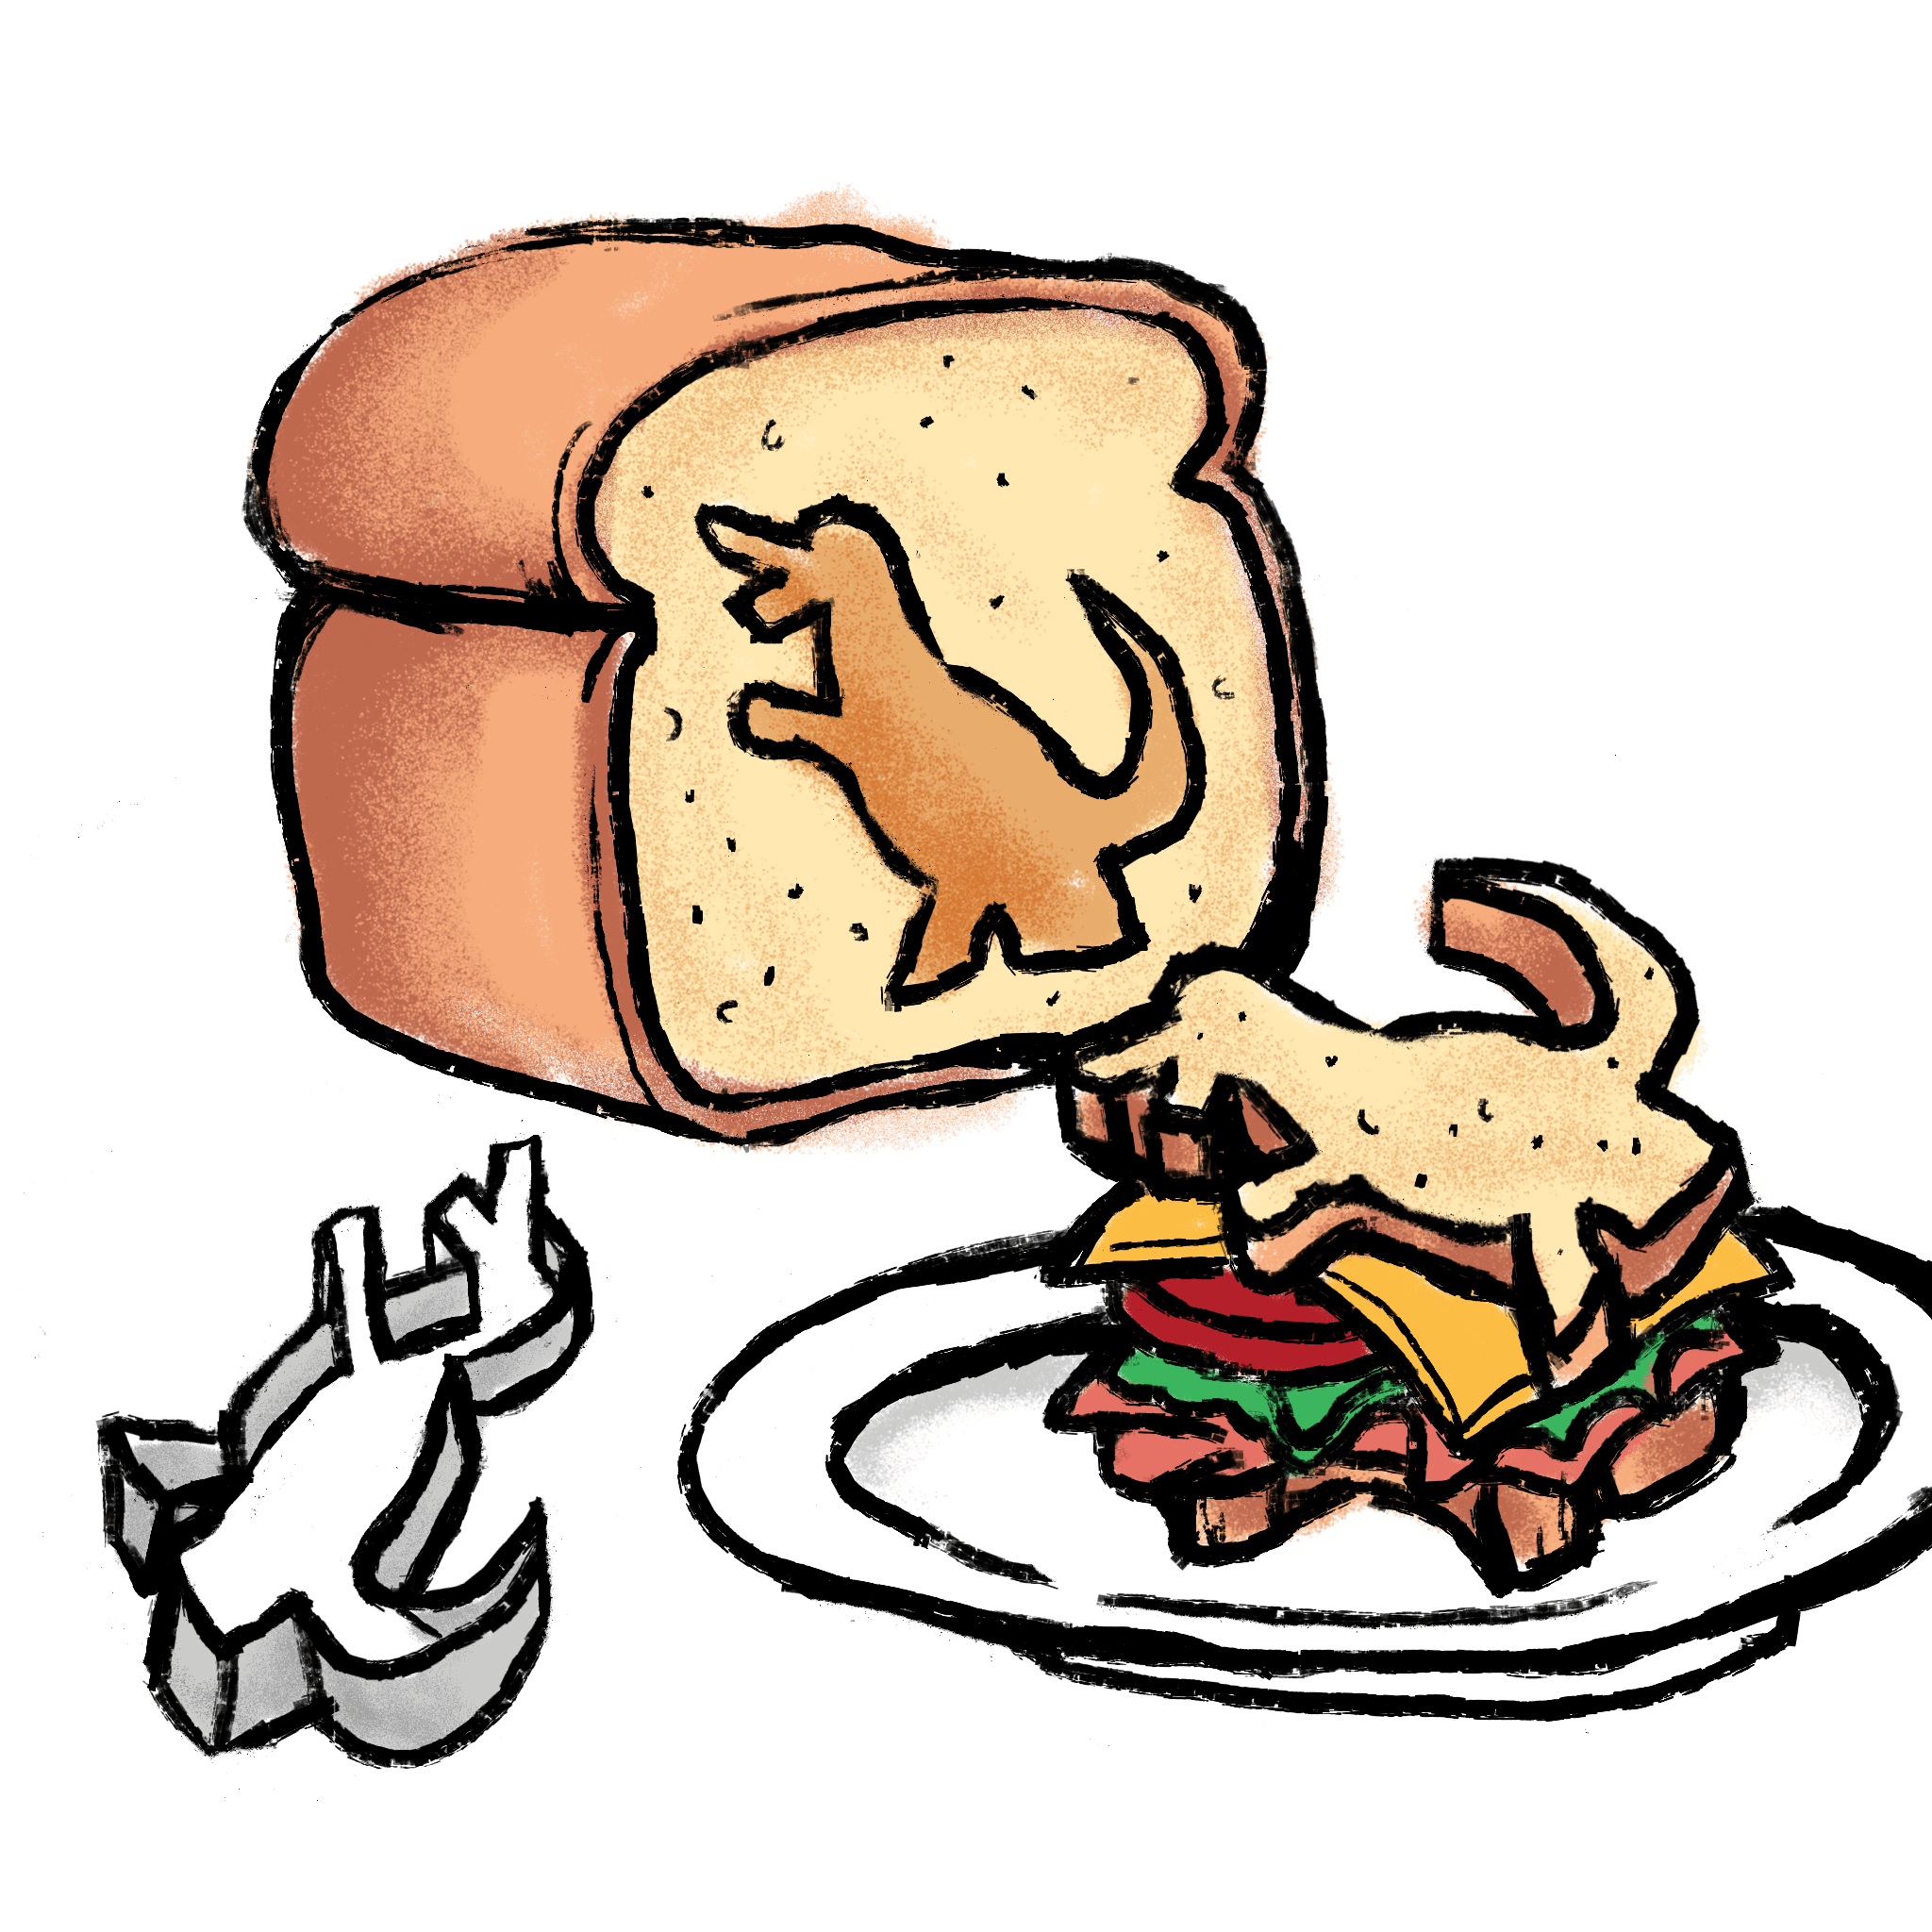 Cookie cutter sandwiches illustration